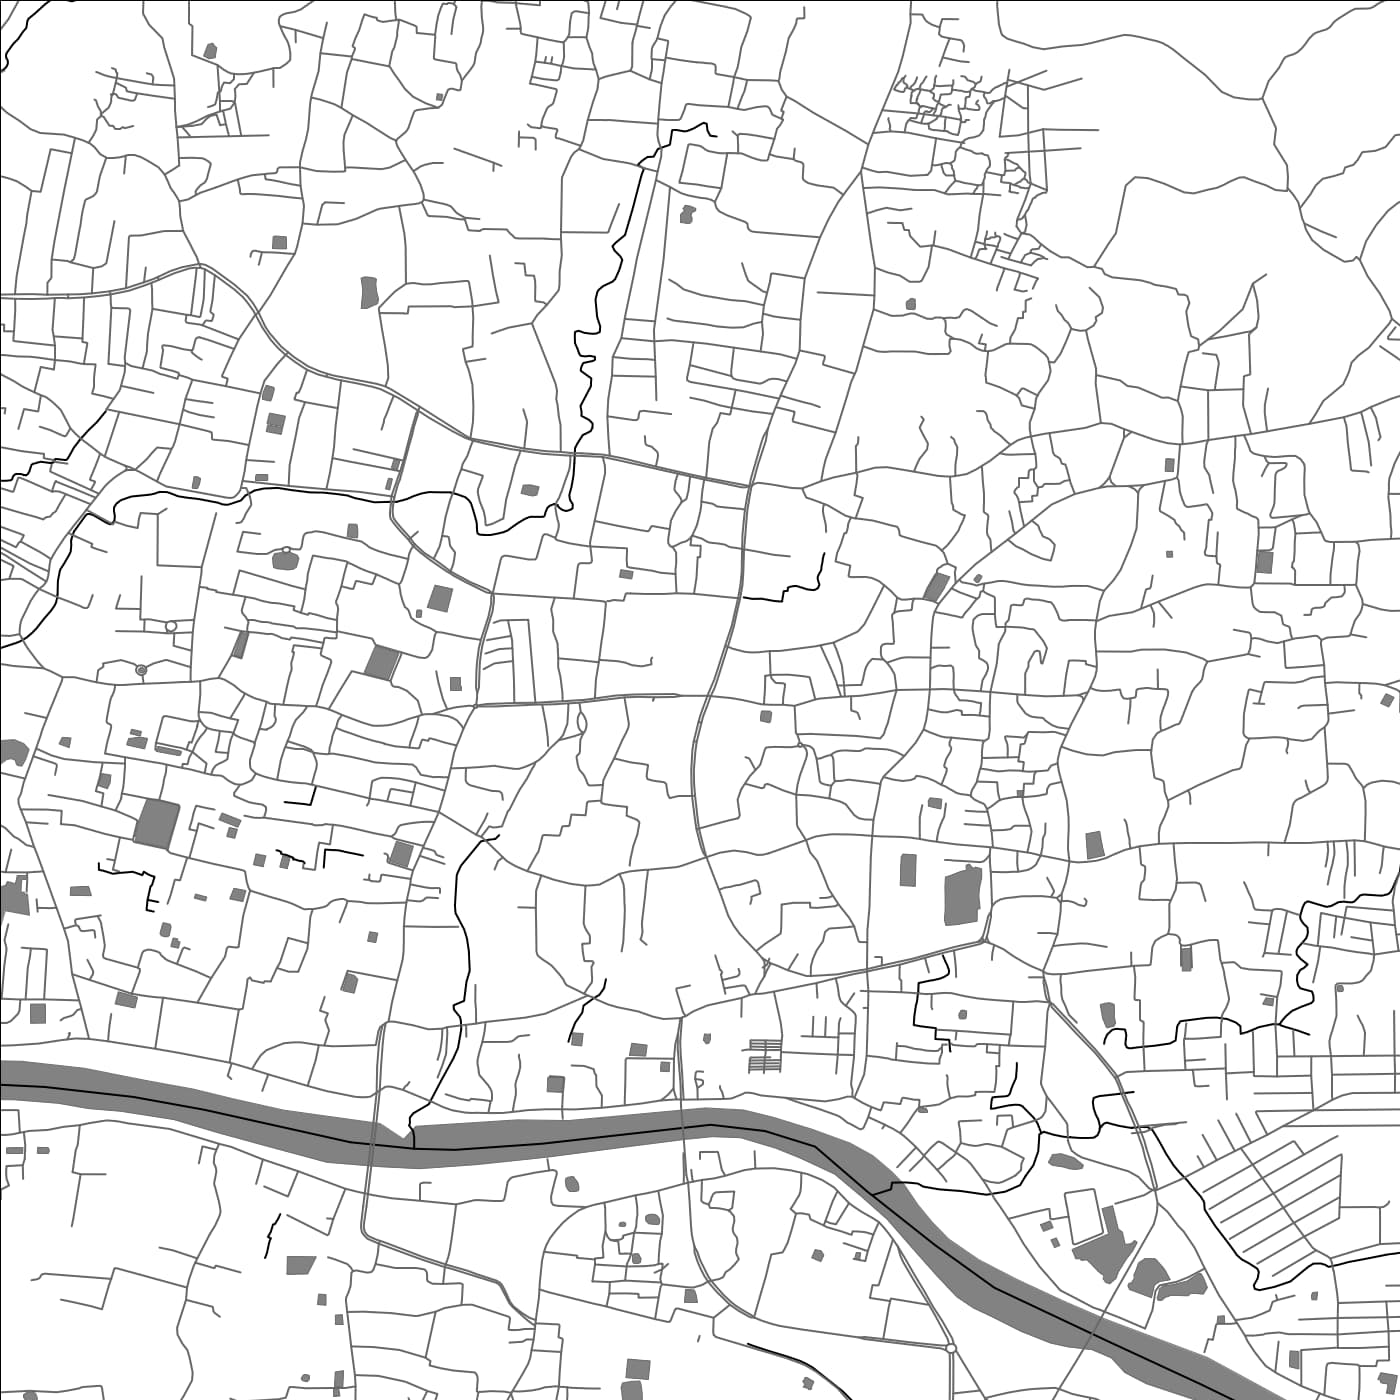 ROAD MAP OF SYLHET, BANGLADESH BY MAPBAKES